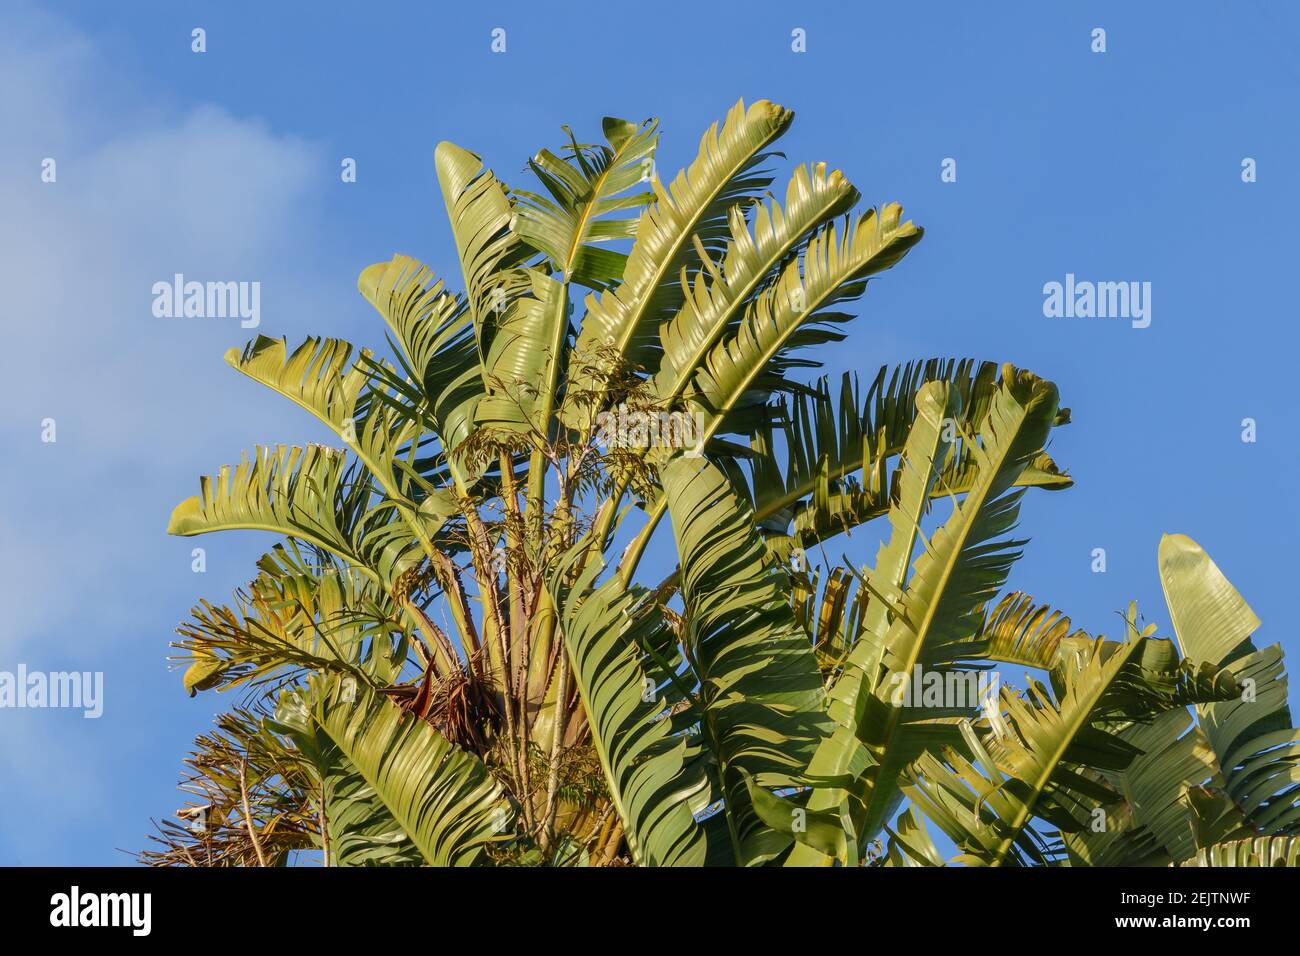 Strelitzia alba leaves of white bird of paradise plant over blue sky outdoors Stock Photo